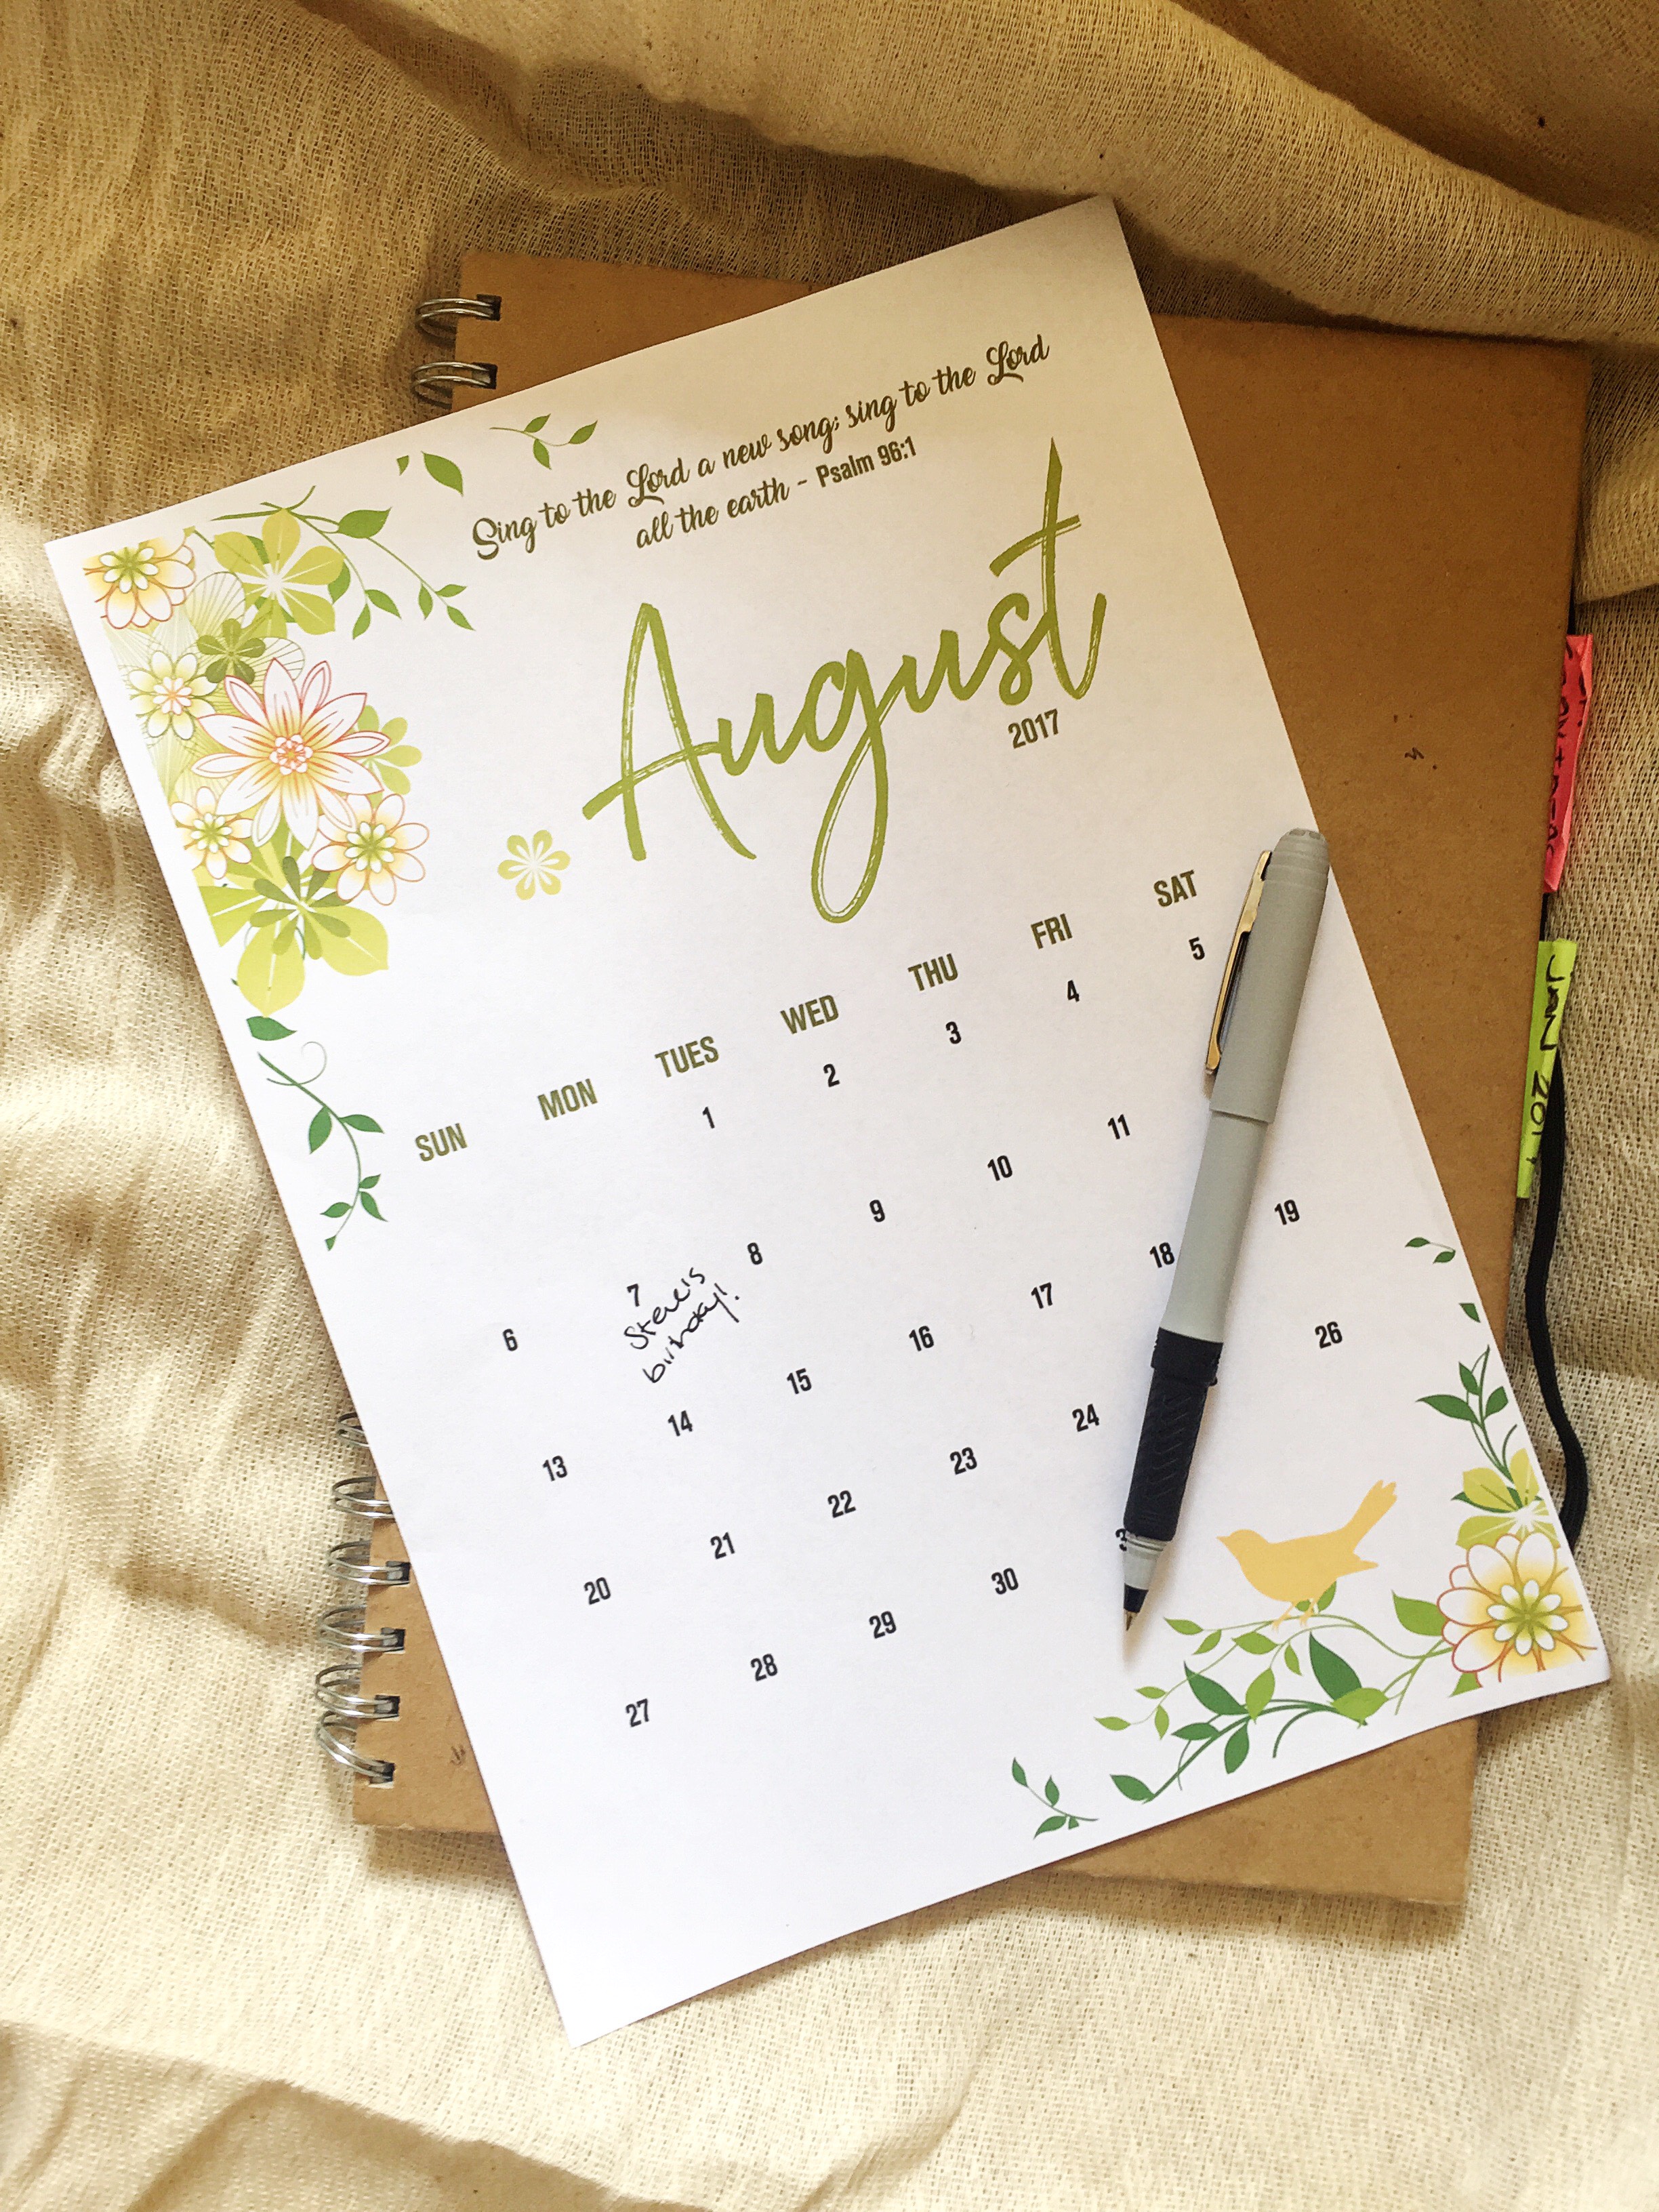 free-download-august-calendar-printable-christianbook-blog